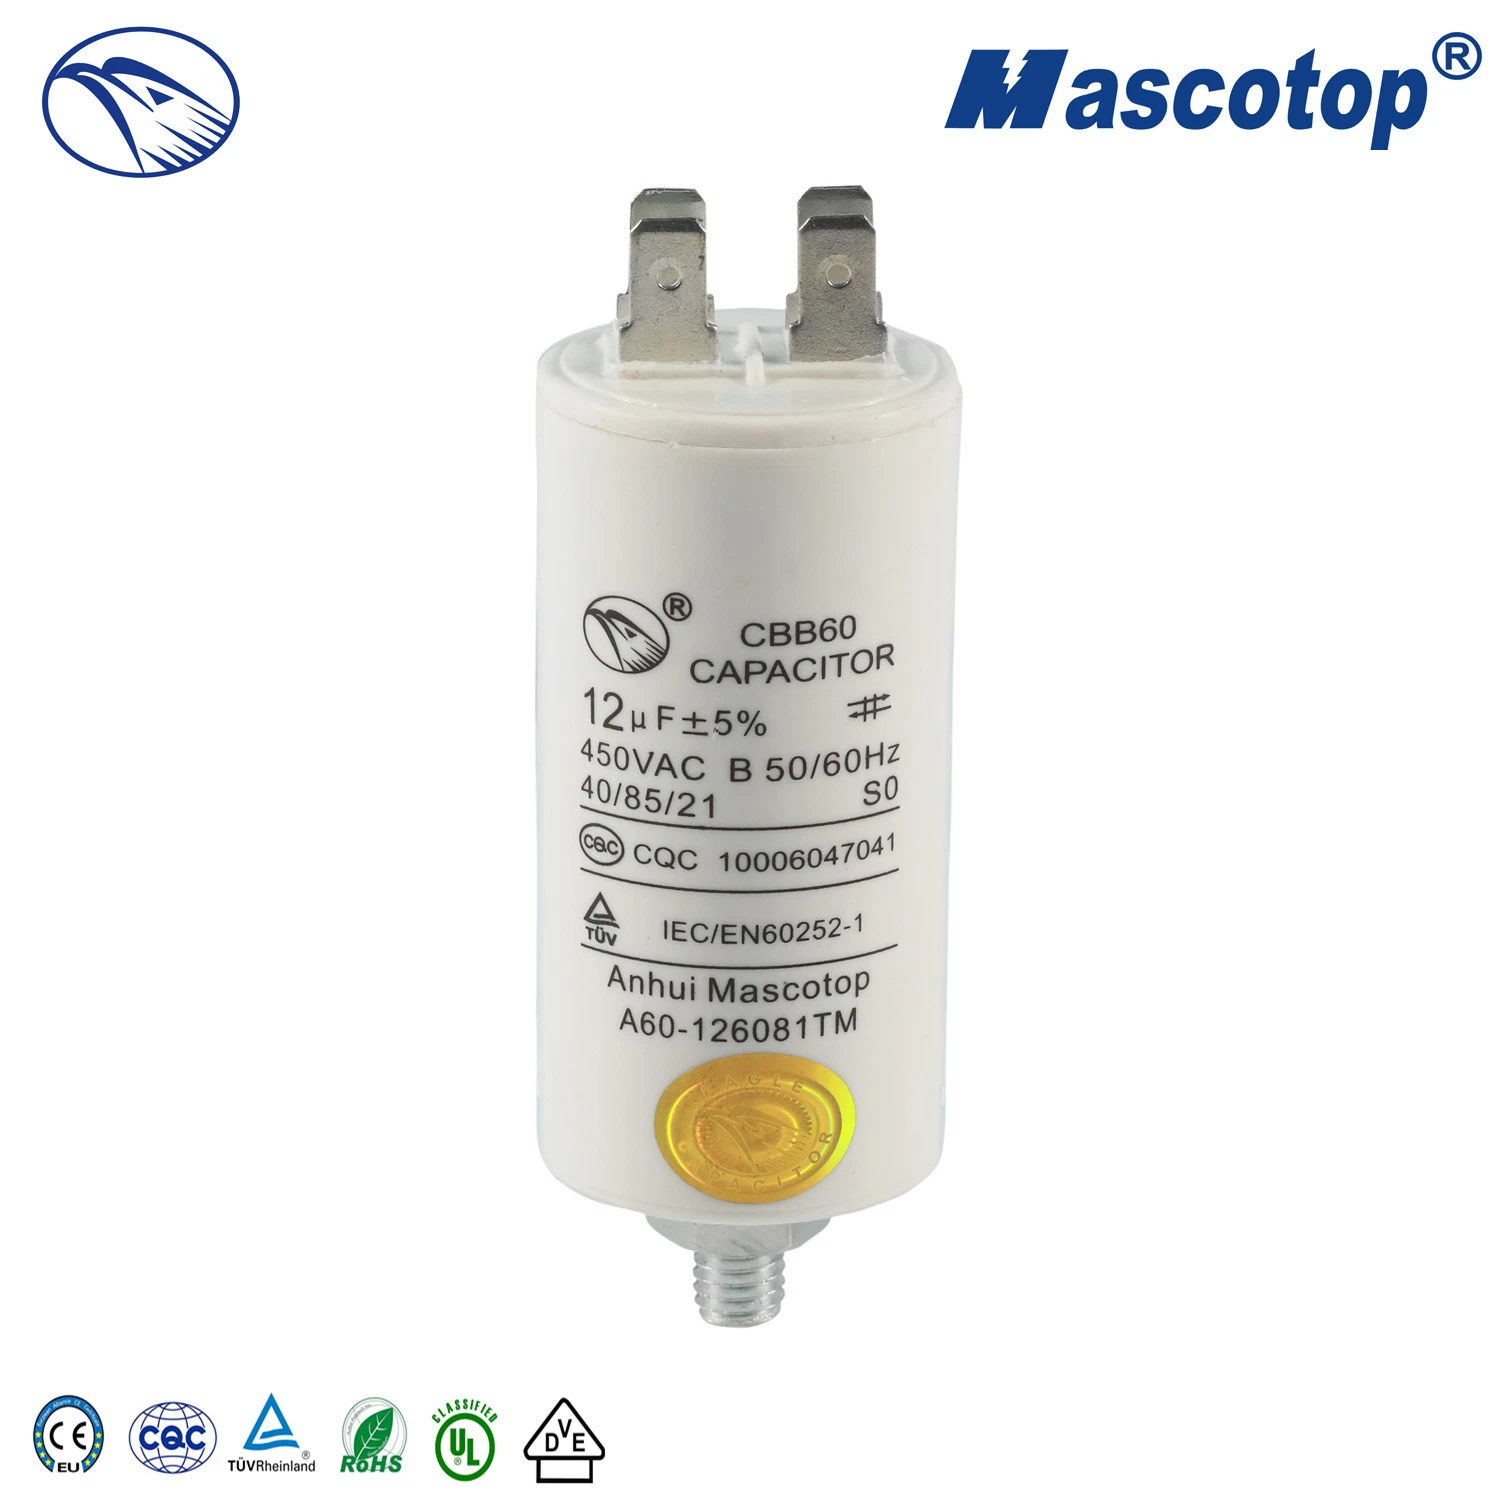 Mascotop Motor Capacitor for Washing Machine and Pump